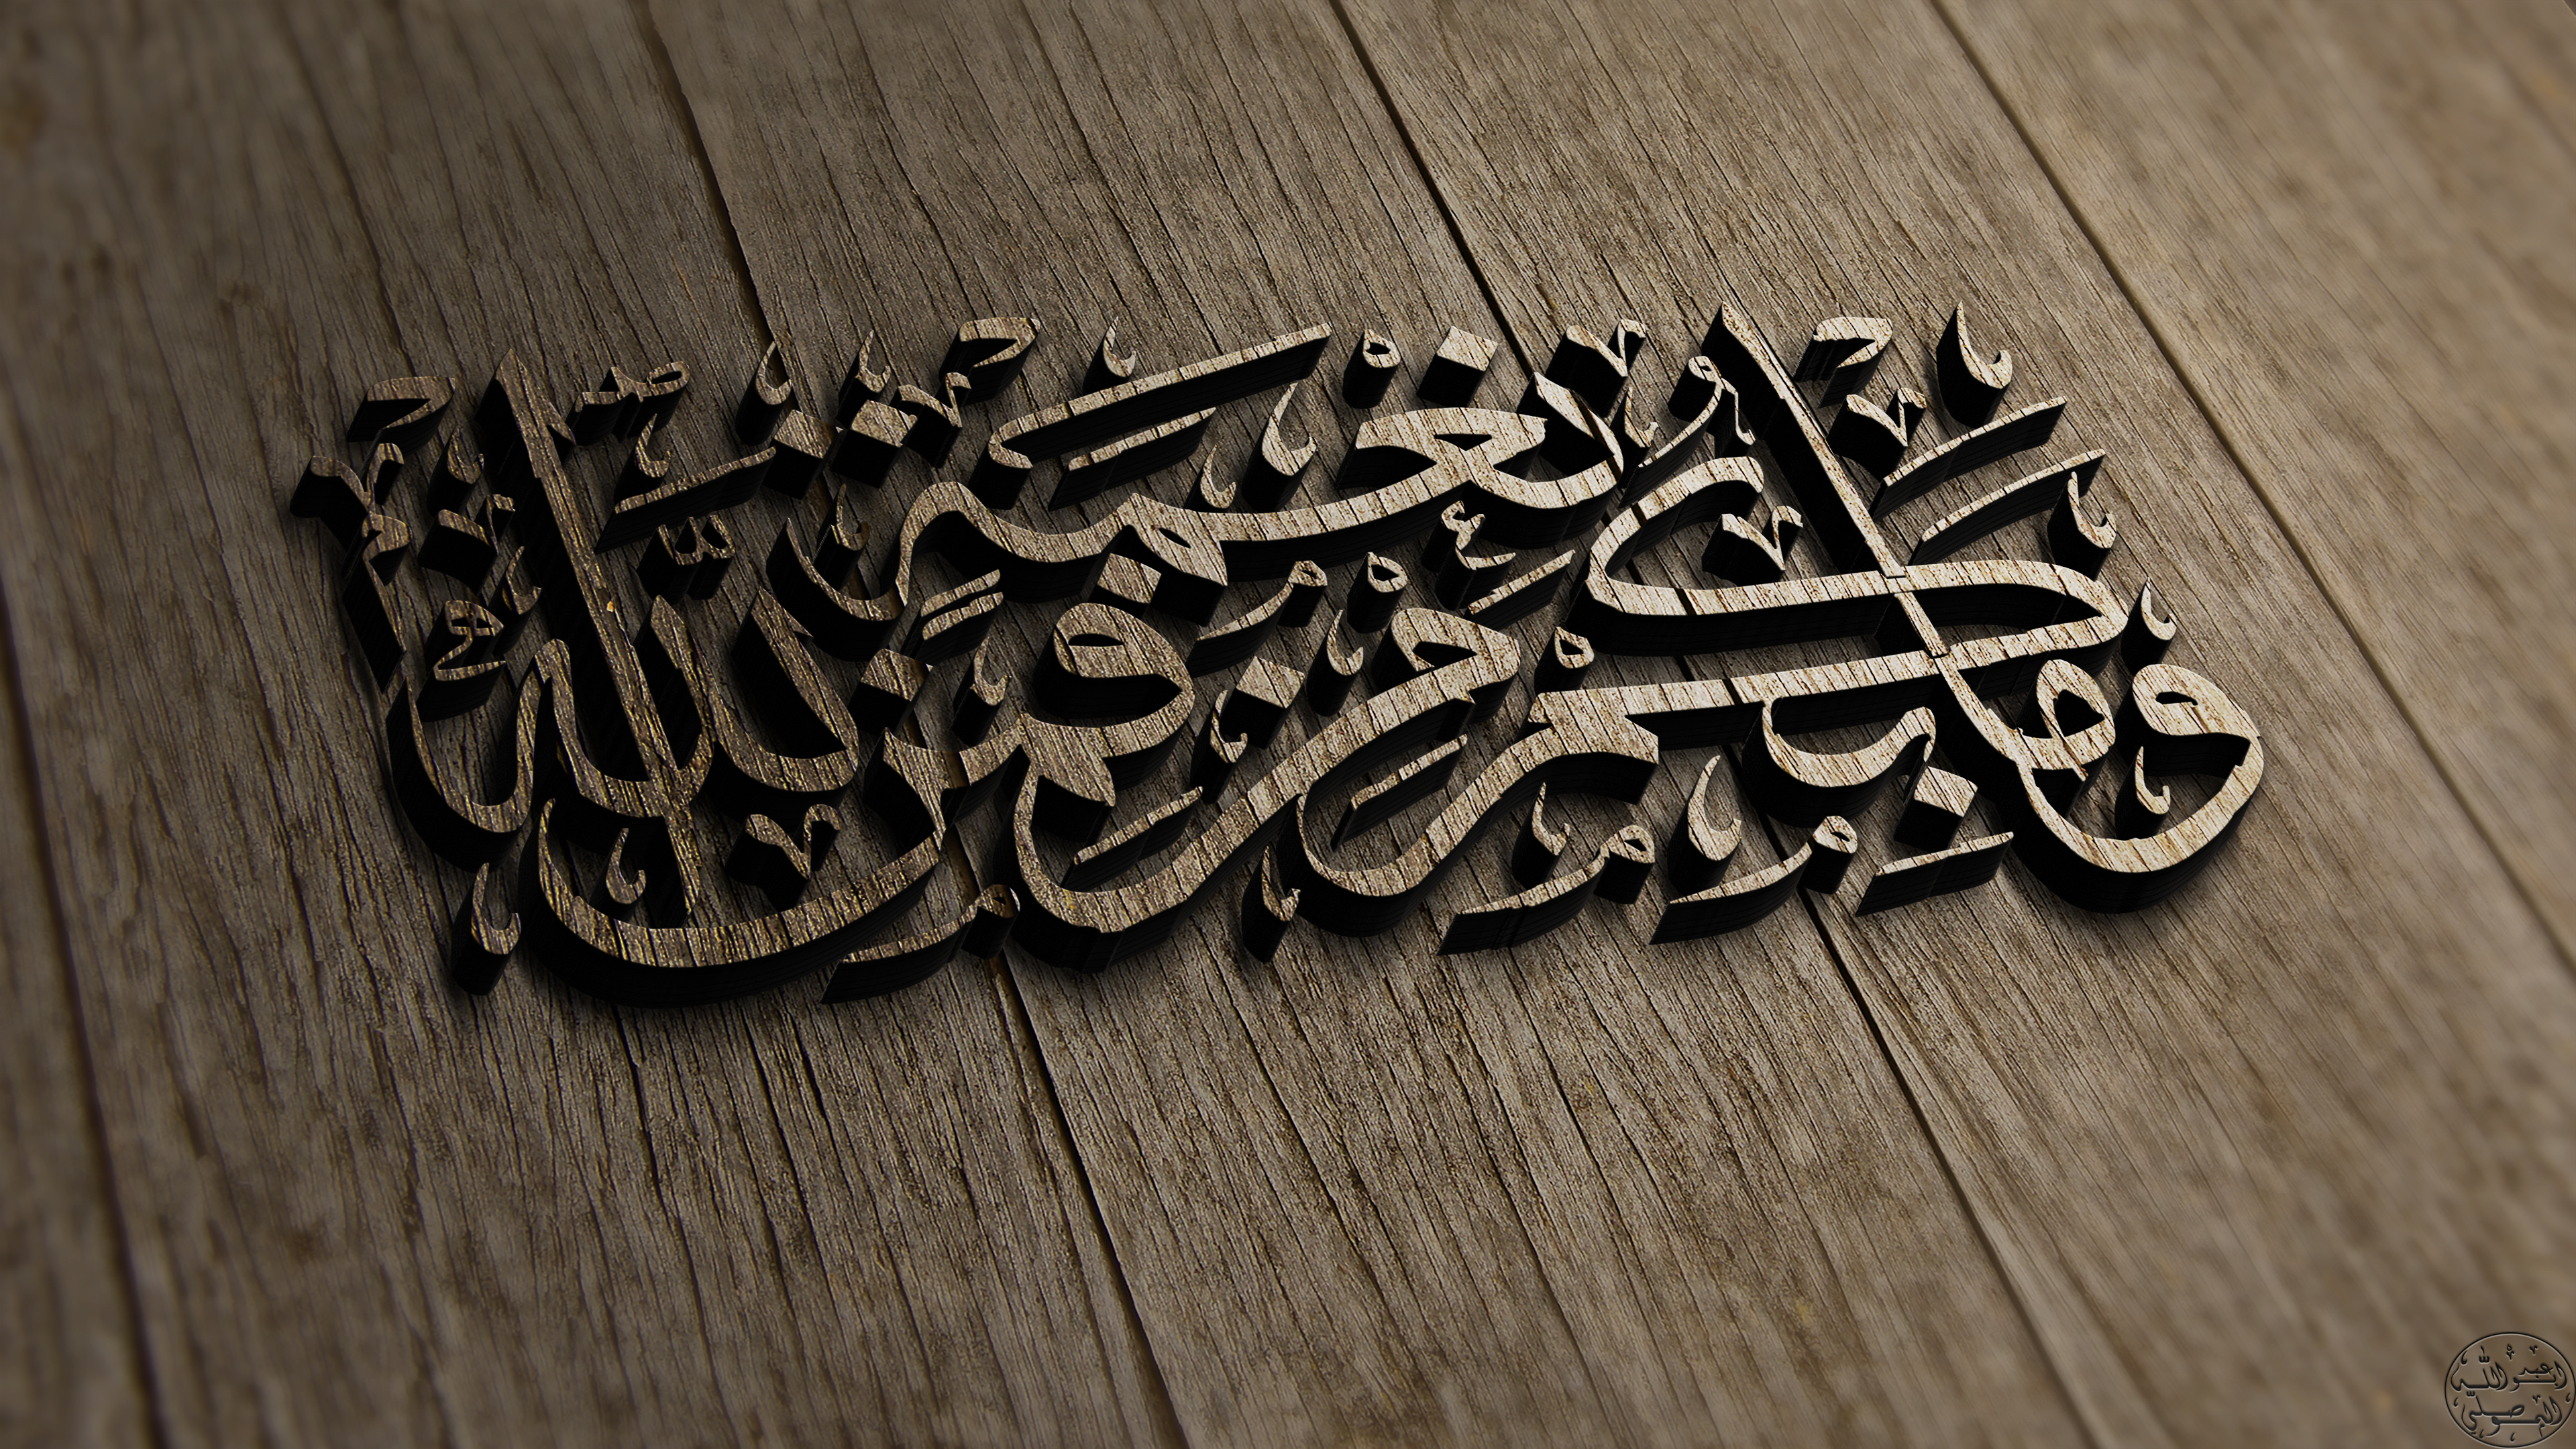 General 3840x2160 Islam Arabic wooden surface religion digital art watermarked